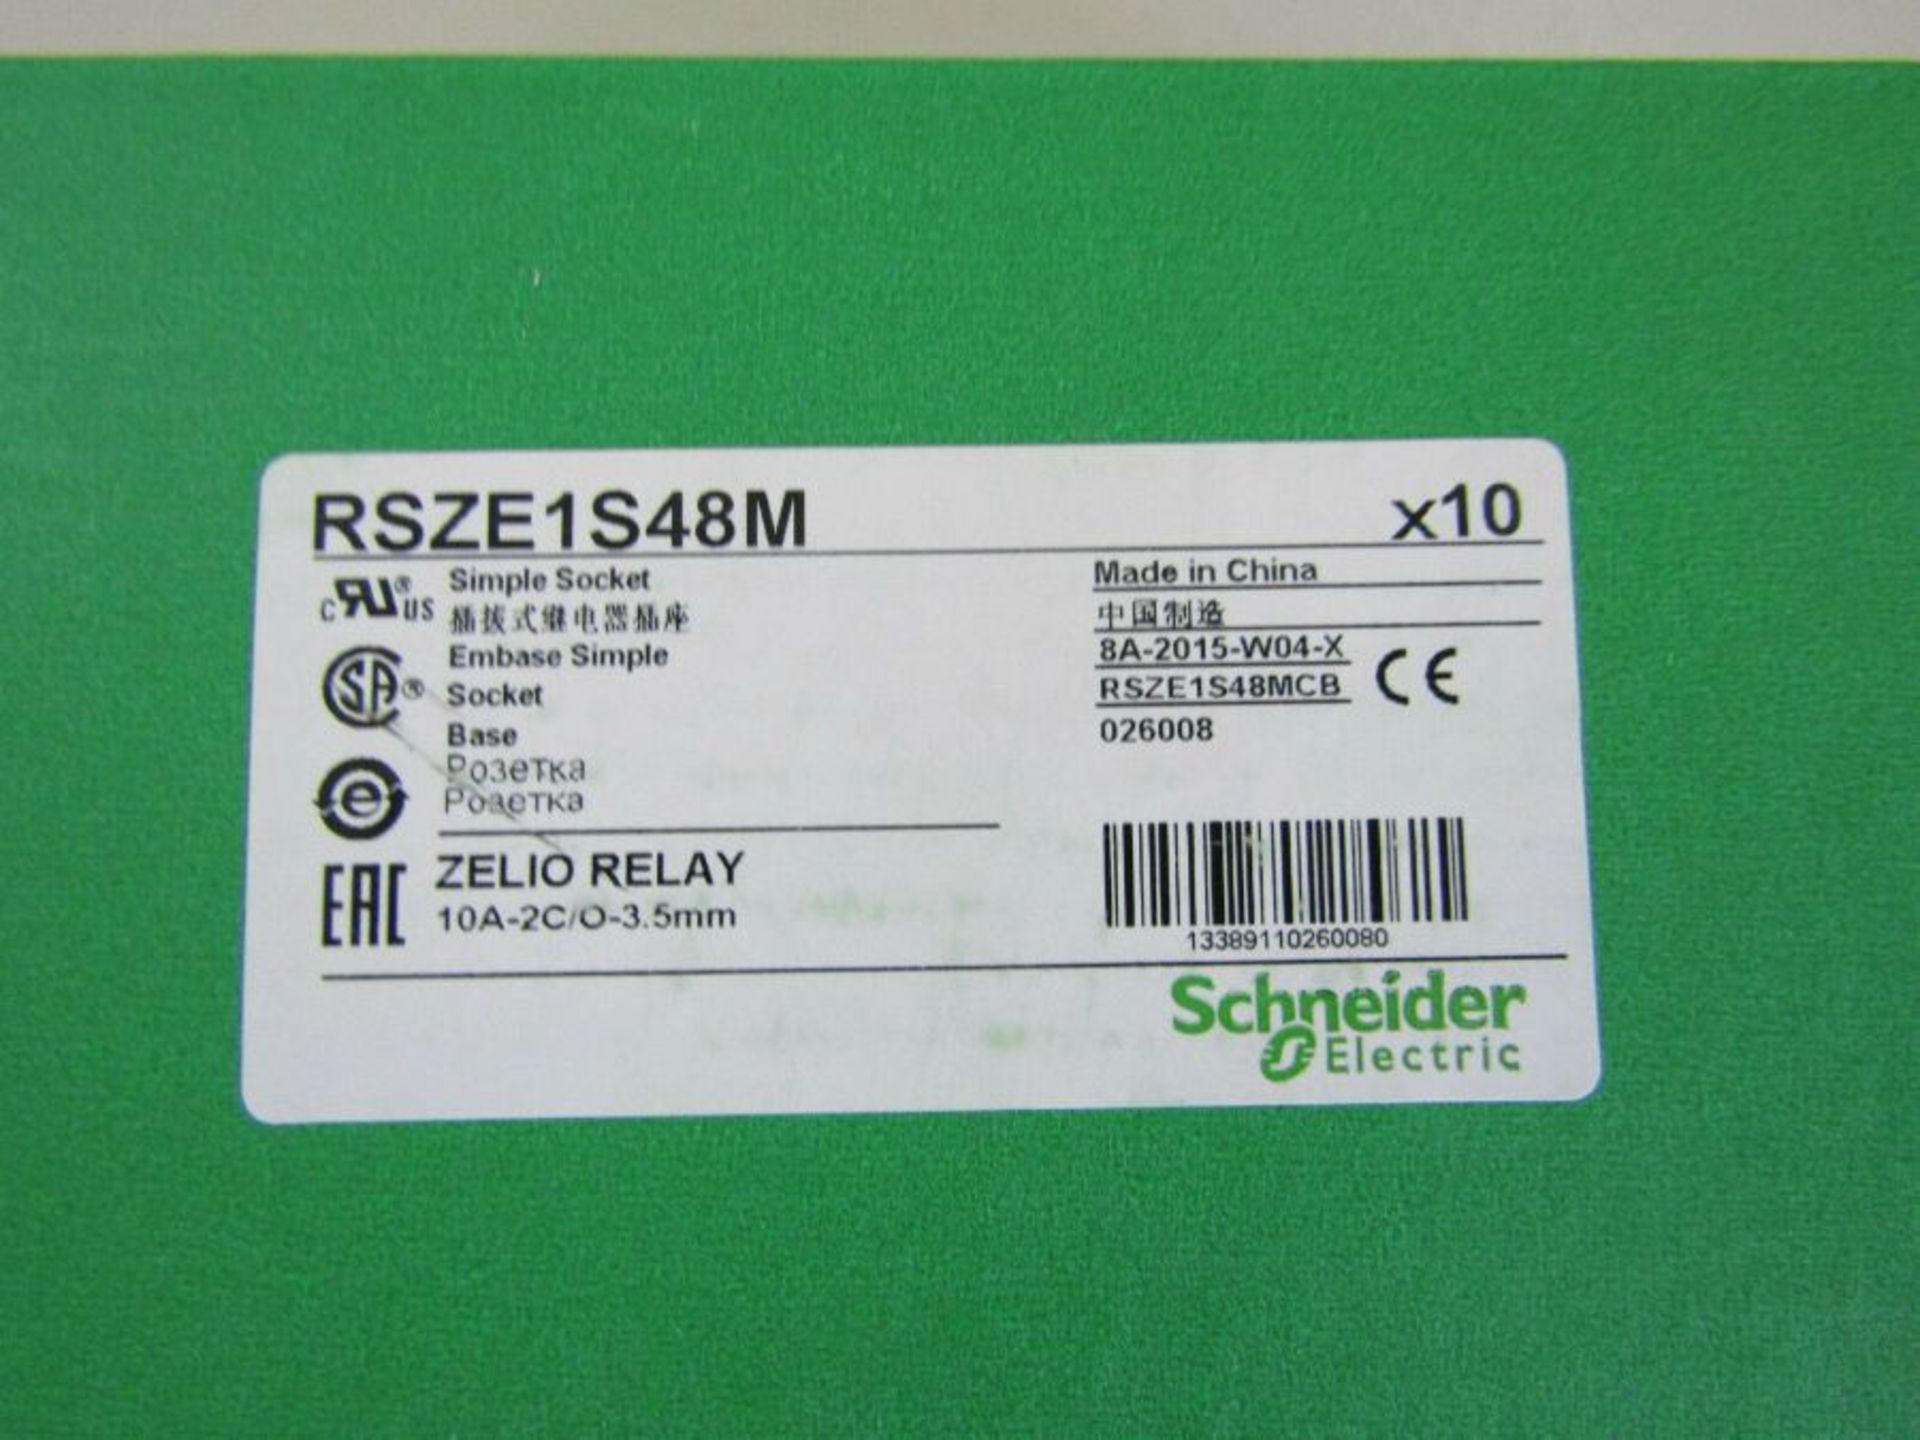 200 x SCHNEIDER RSZE1S48M Relay Socket for RSB Series - S2 - 8497667 - Bild 2 aus 2